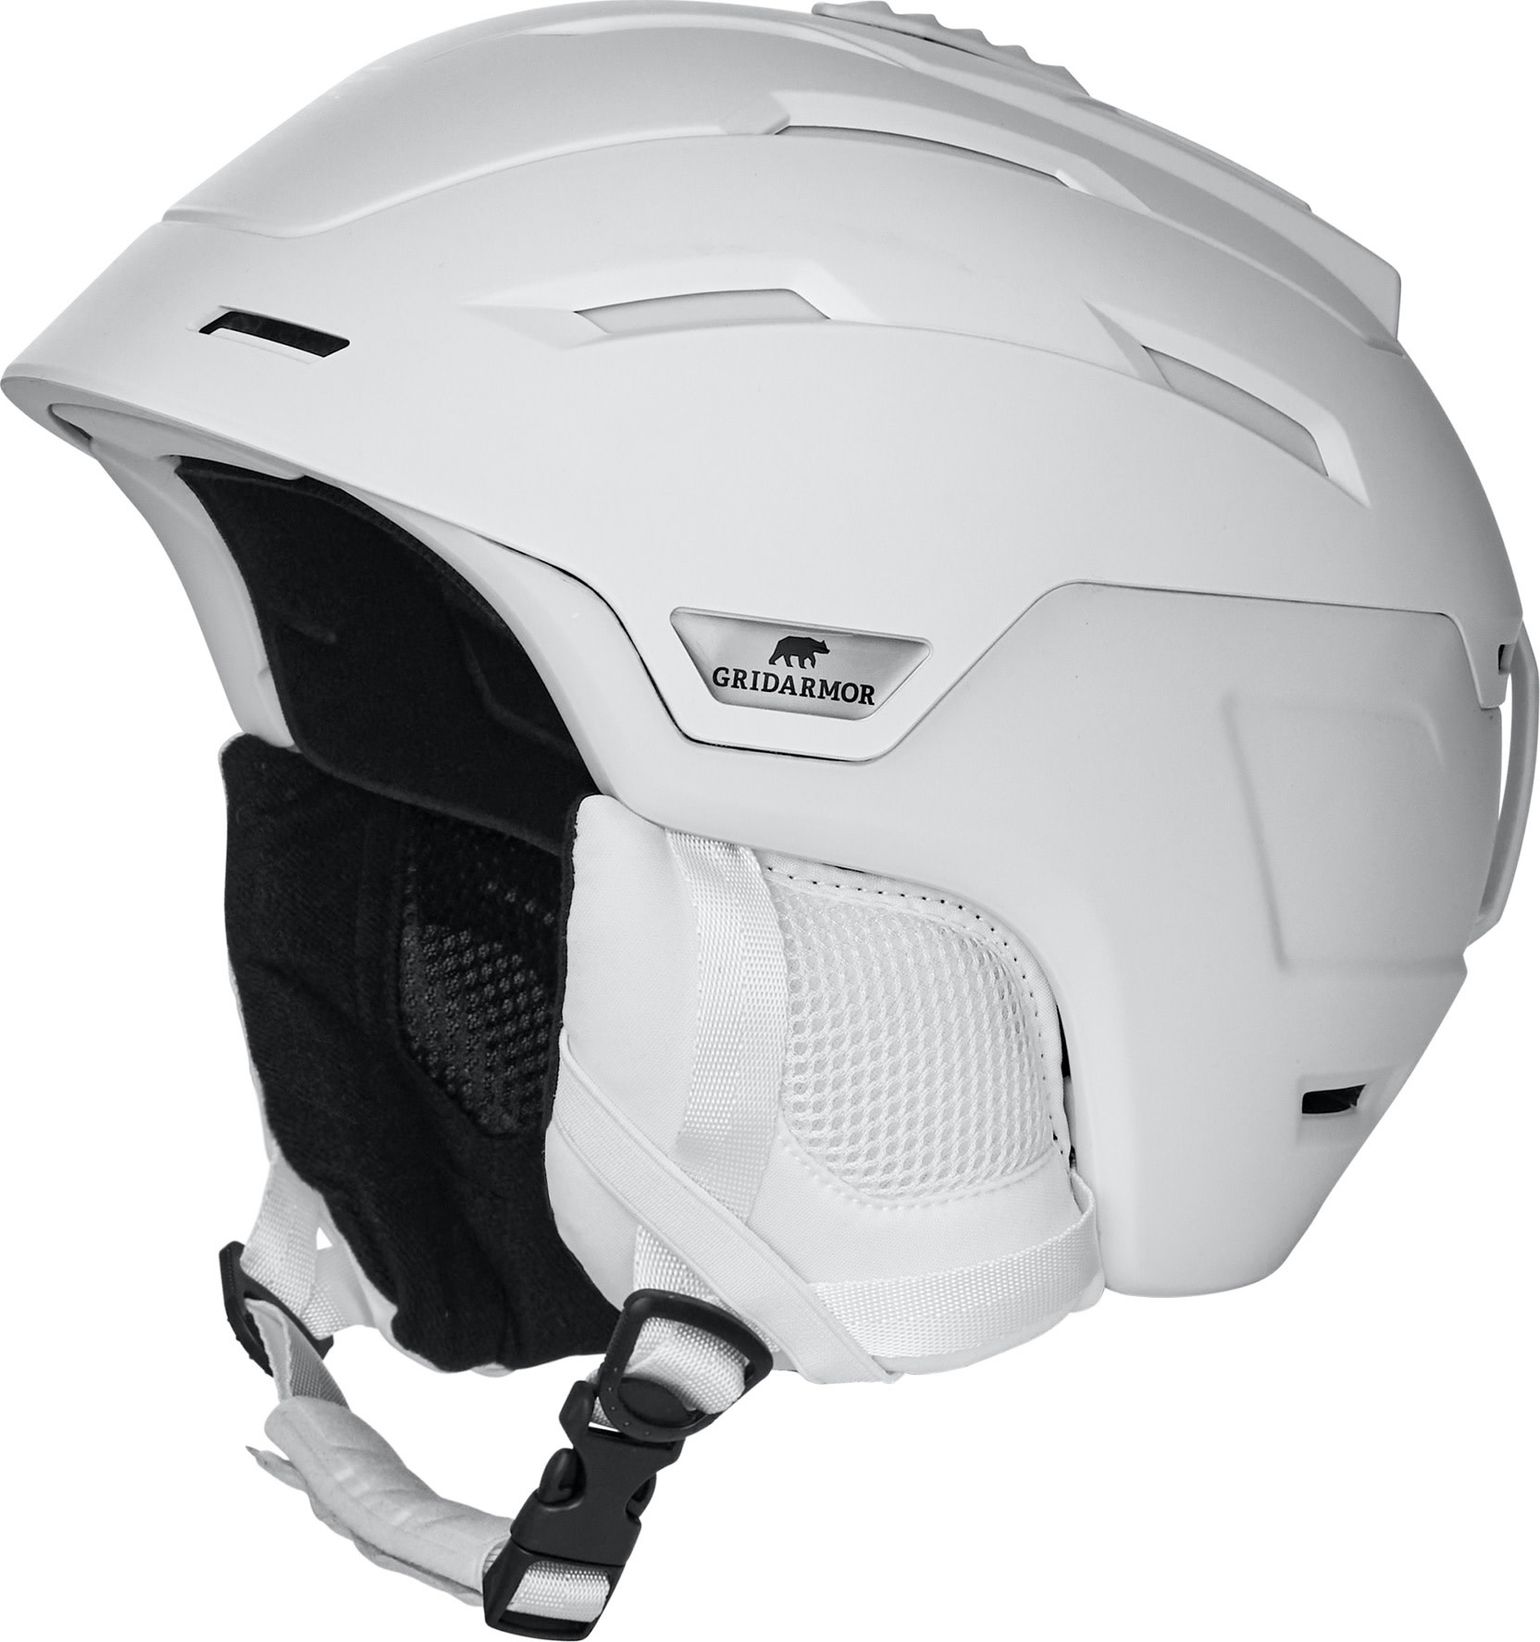 Gridarmor Unisex Hafjell Alpine Helmet White